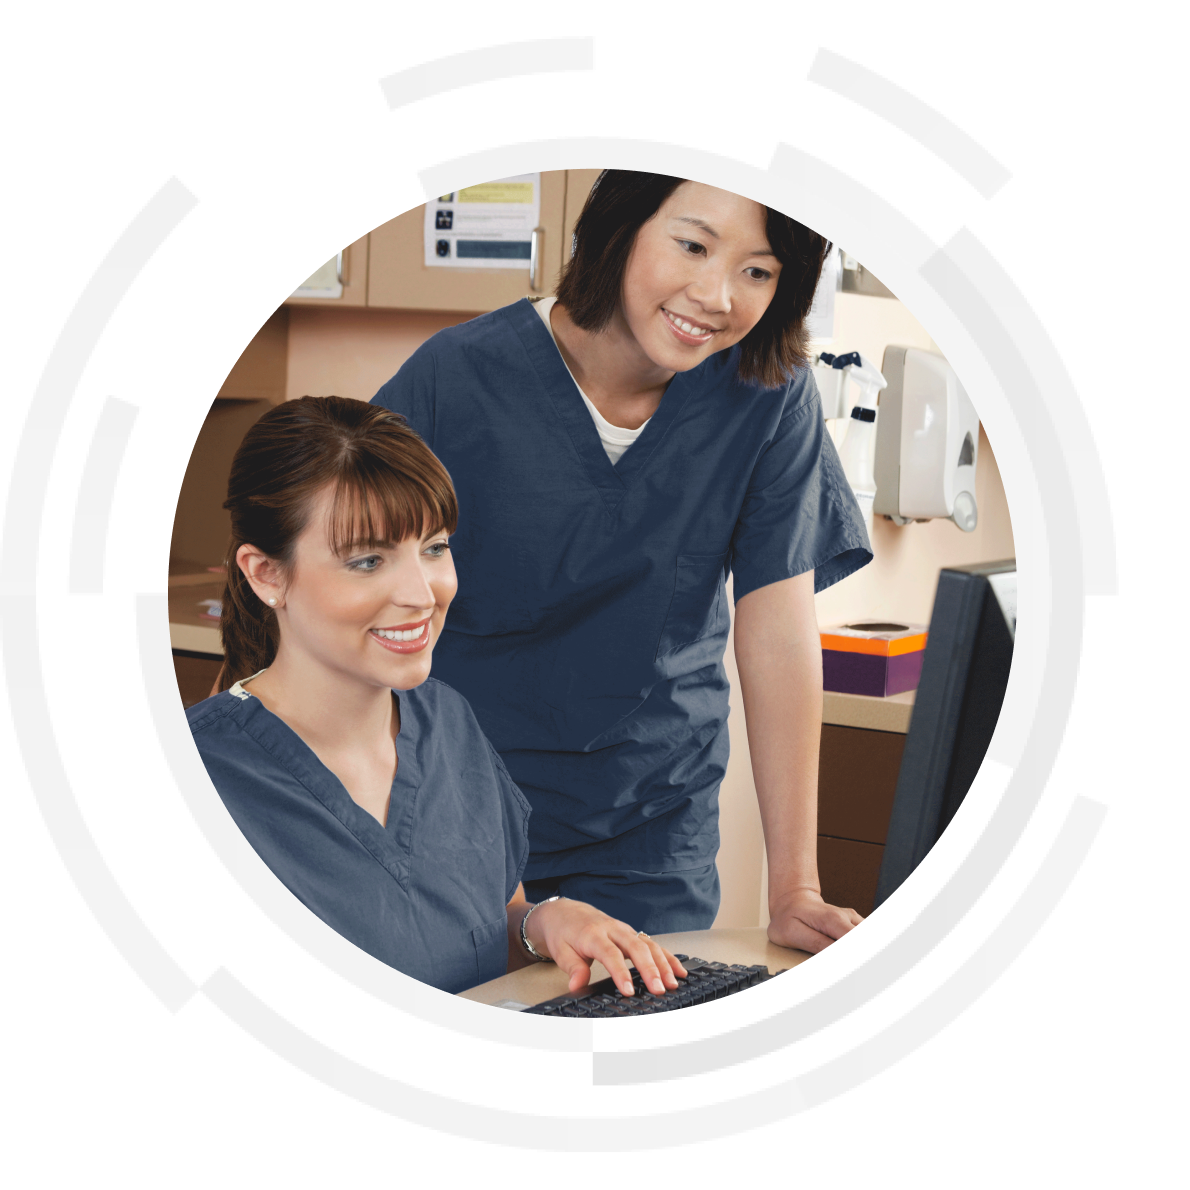 Two smiling female clinicians entering data into a desktop computer.